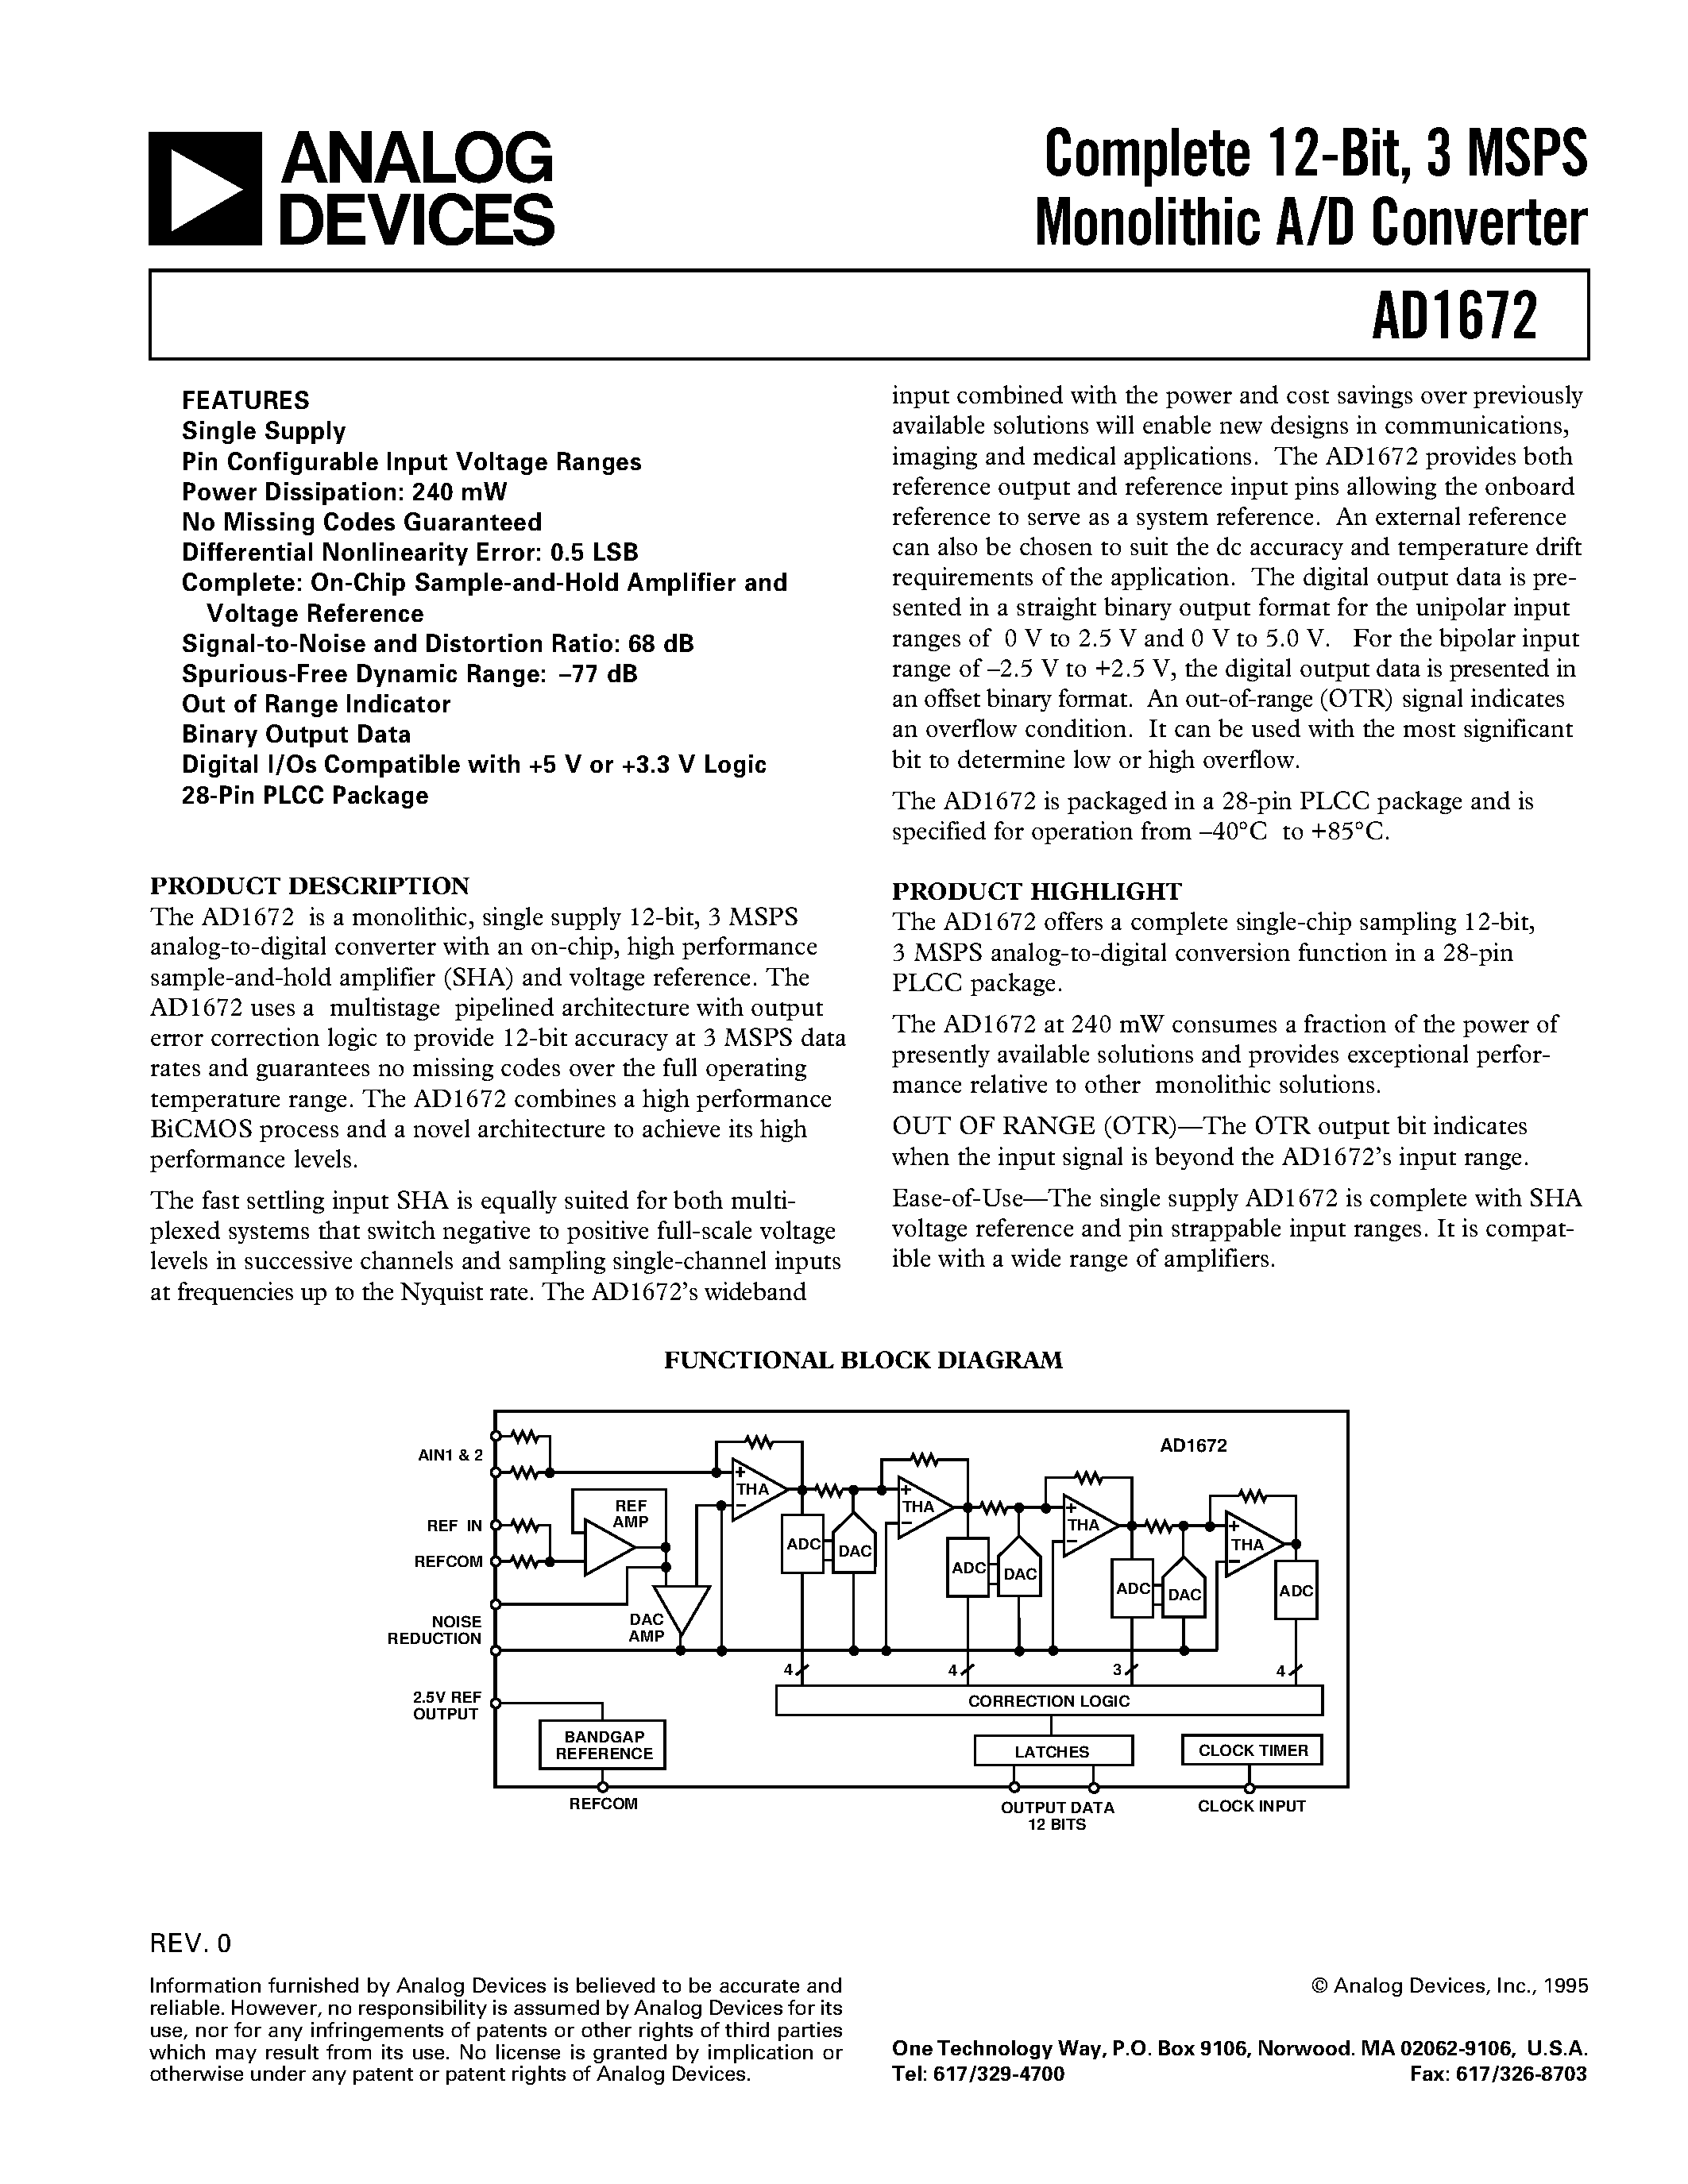 Datasheet AD1672AP - Complete 12-Bit/ 3 MSPS Monolithic A/D Converter page 1